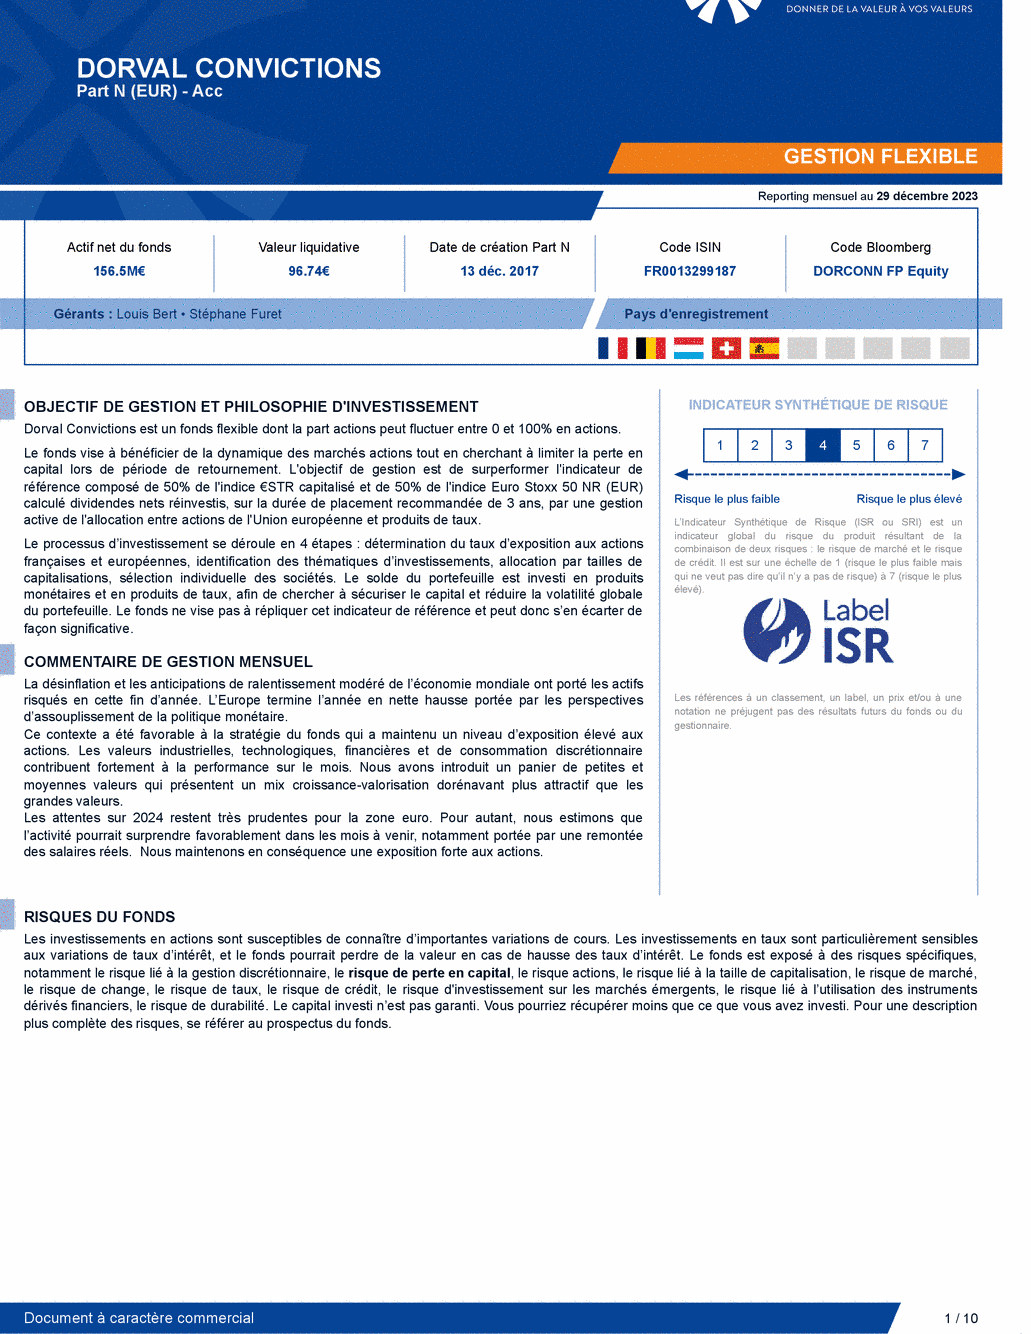 Reporting DORVAL CONVICTIONS N - 29/12/2023 - Français